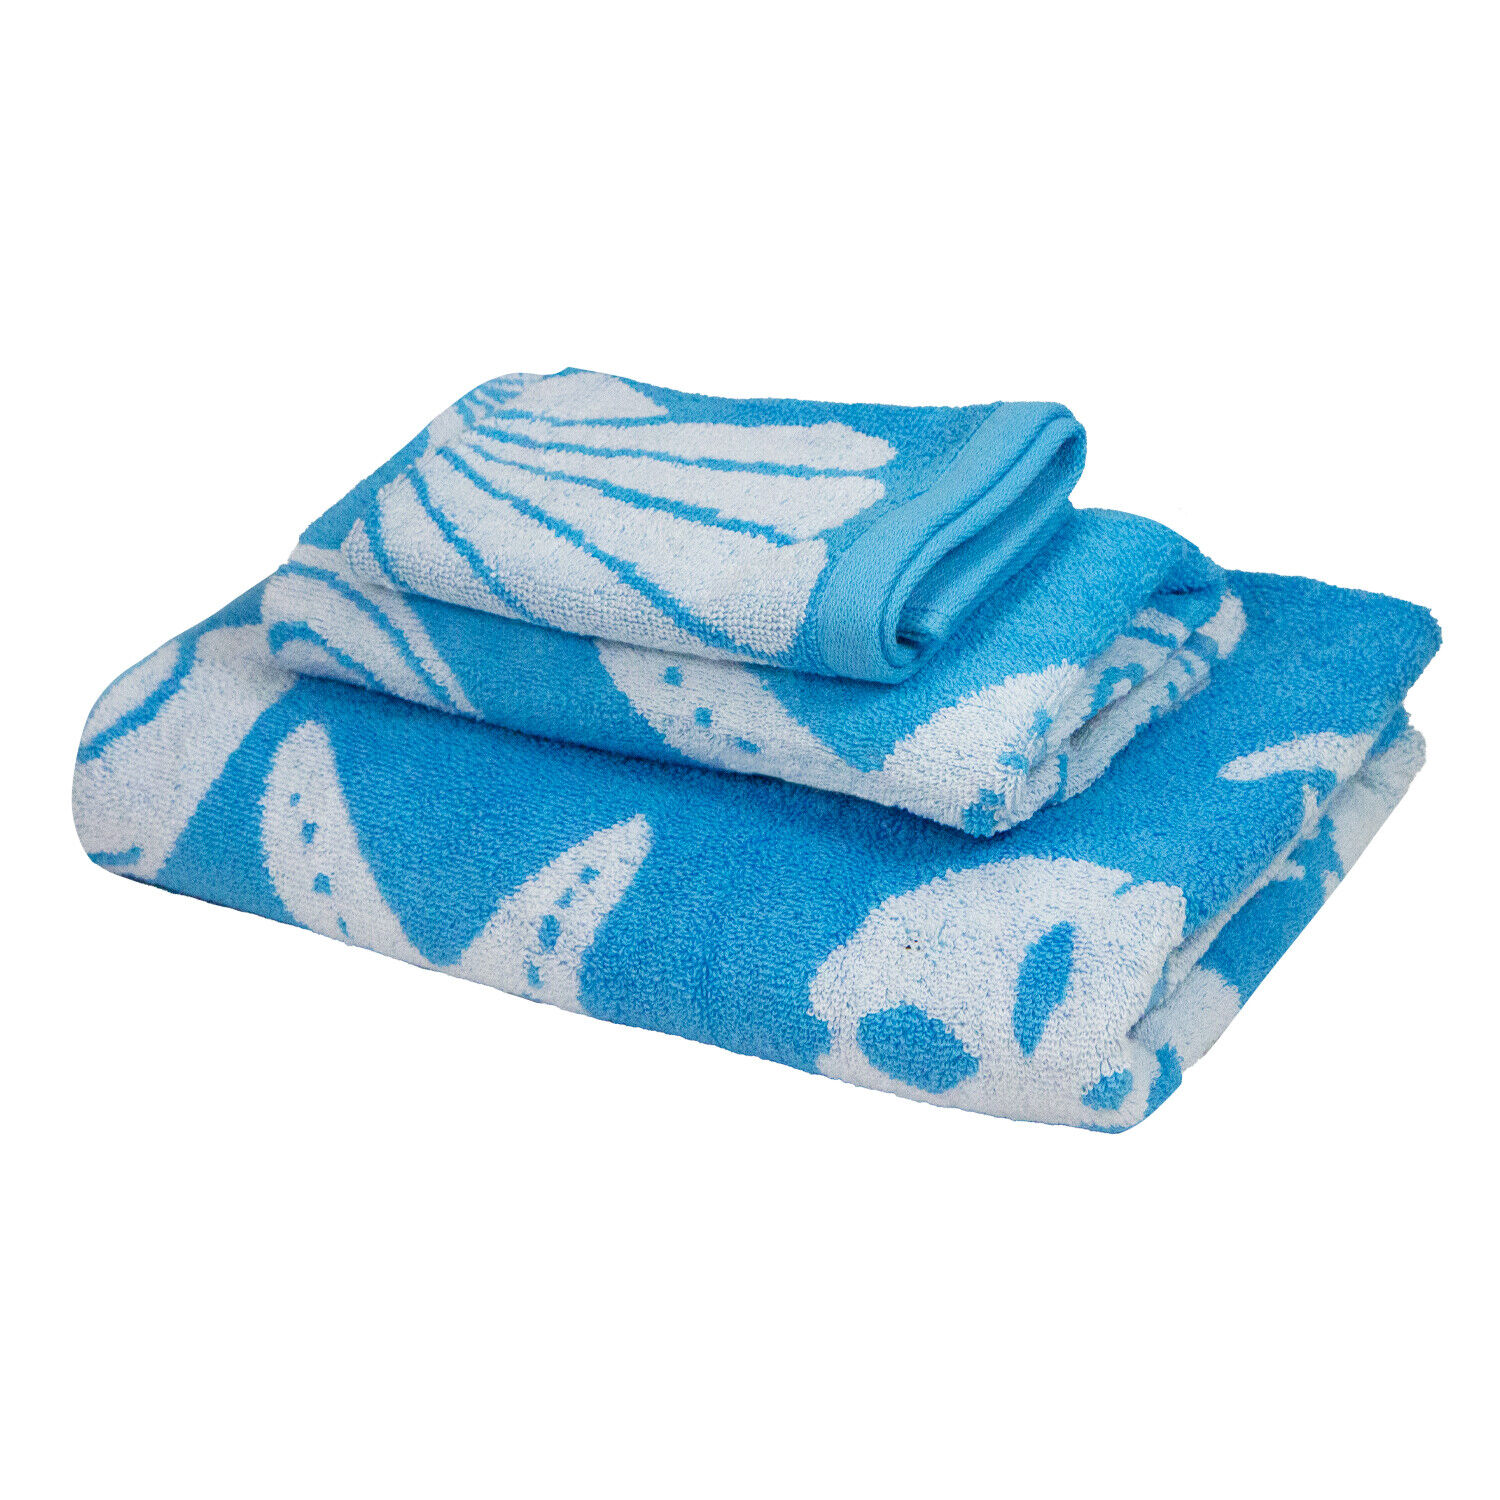 3 Piece Bathroom Towel Set - Seashell Ocean Beach Pattern - Color Options - Soft Arkwright